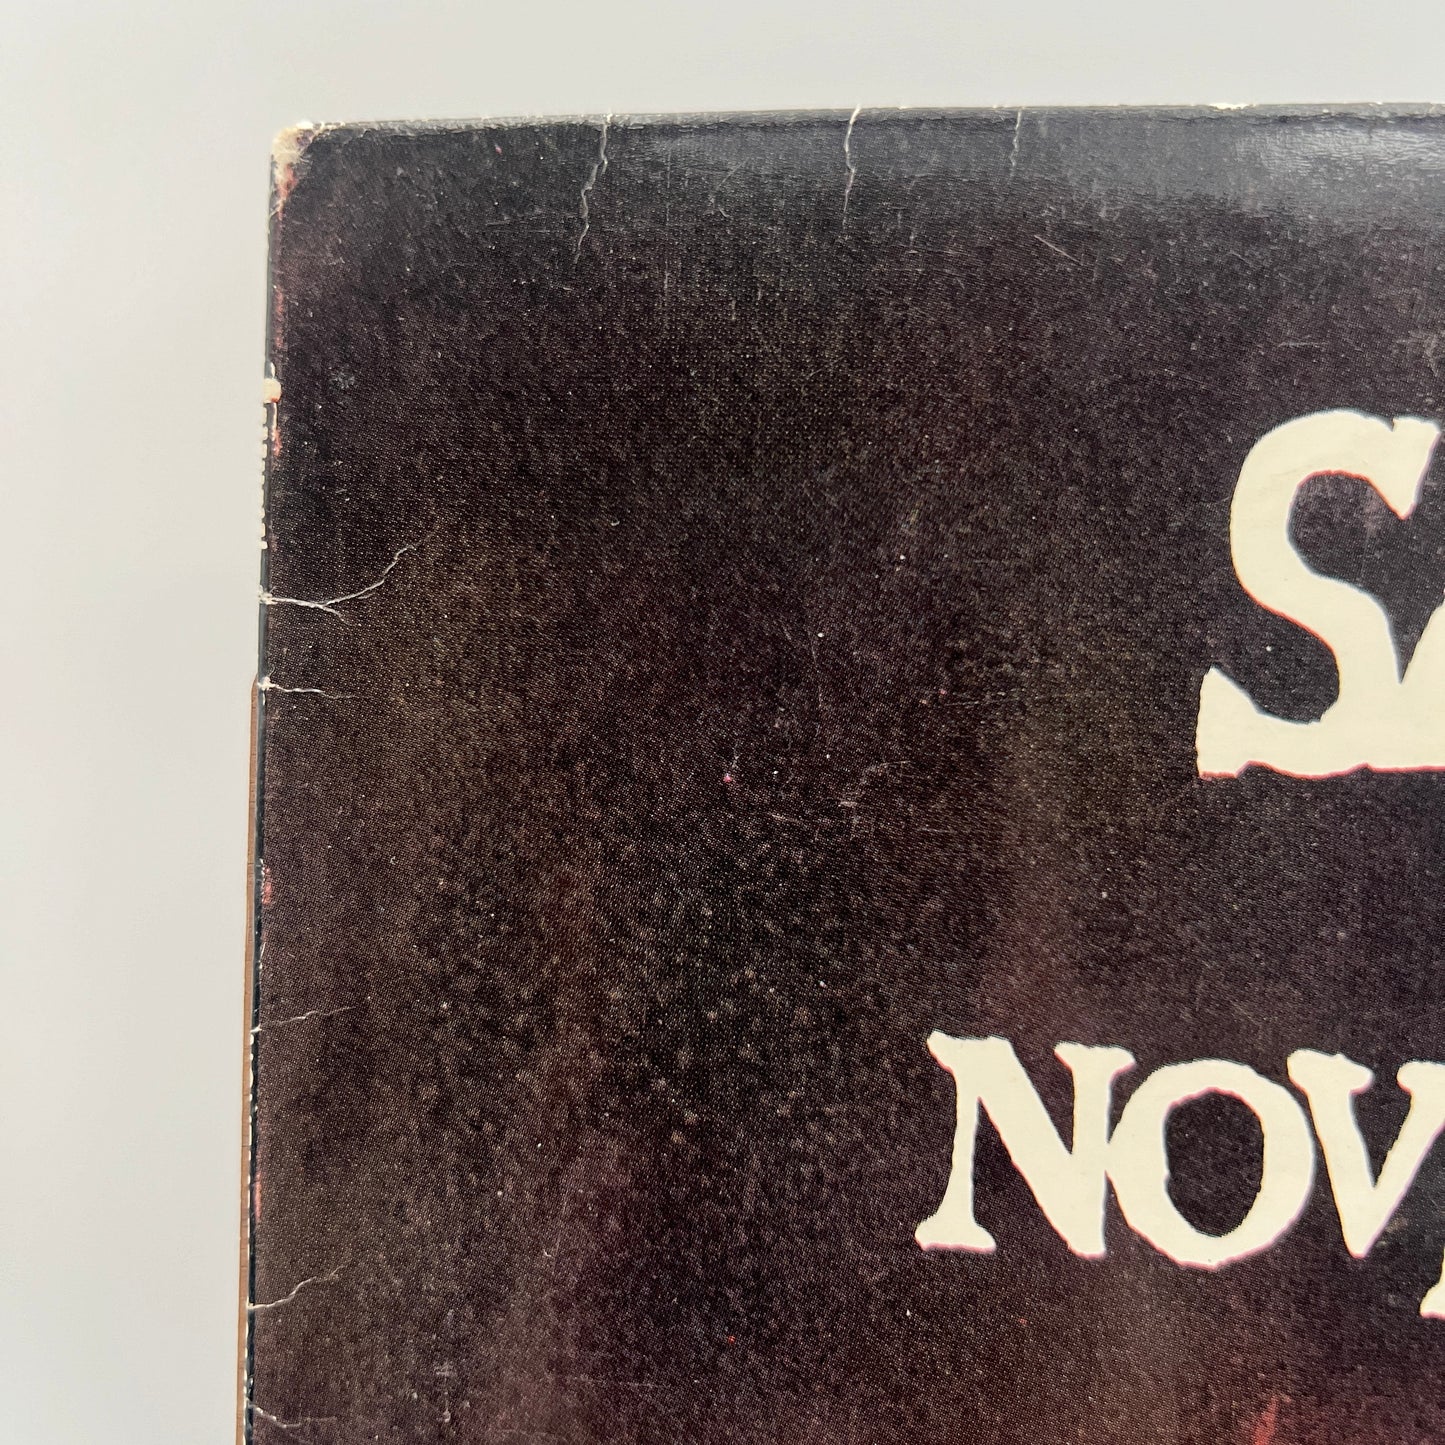 Samhain - November-Coming-Fire Vinyl LP Original 1st Press w/ Insert